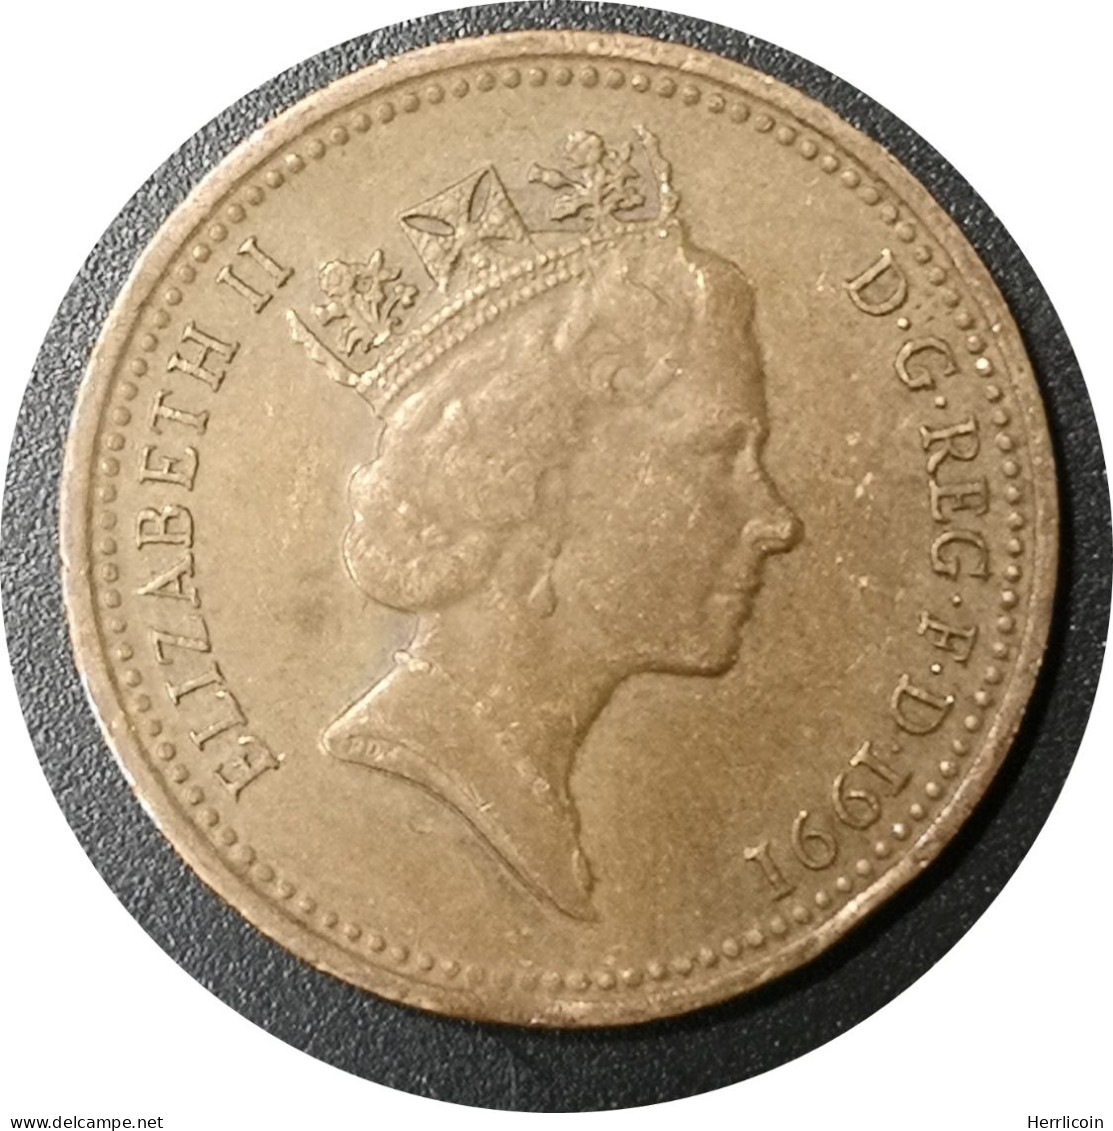 Monnaie Royaume Uni - 1991 - 1 Penny Elizabeth II 3e Portrait - 1 Penny & 1 New Penny